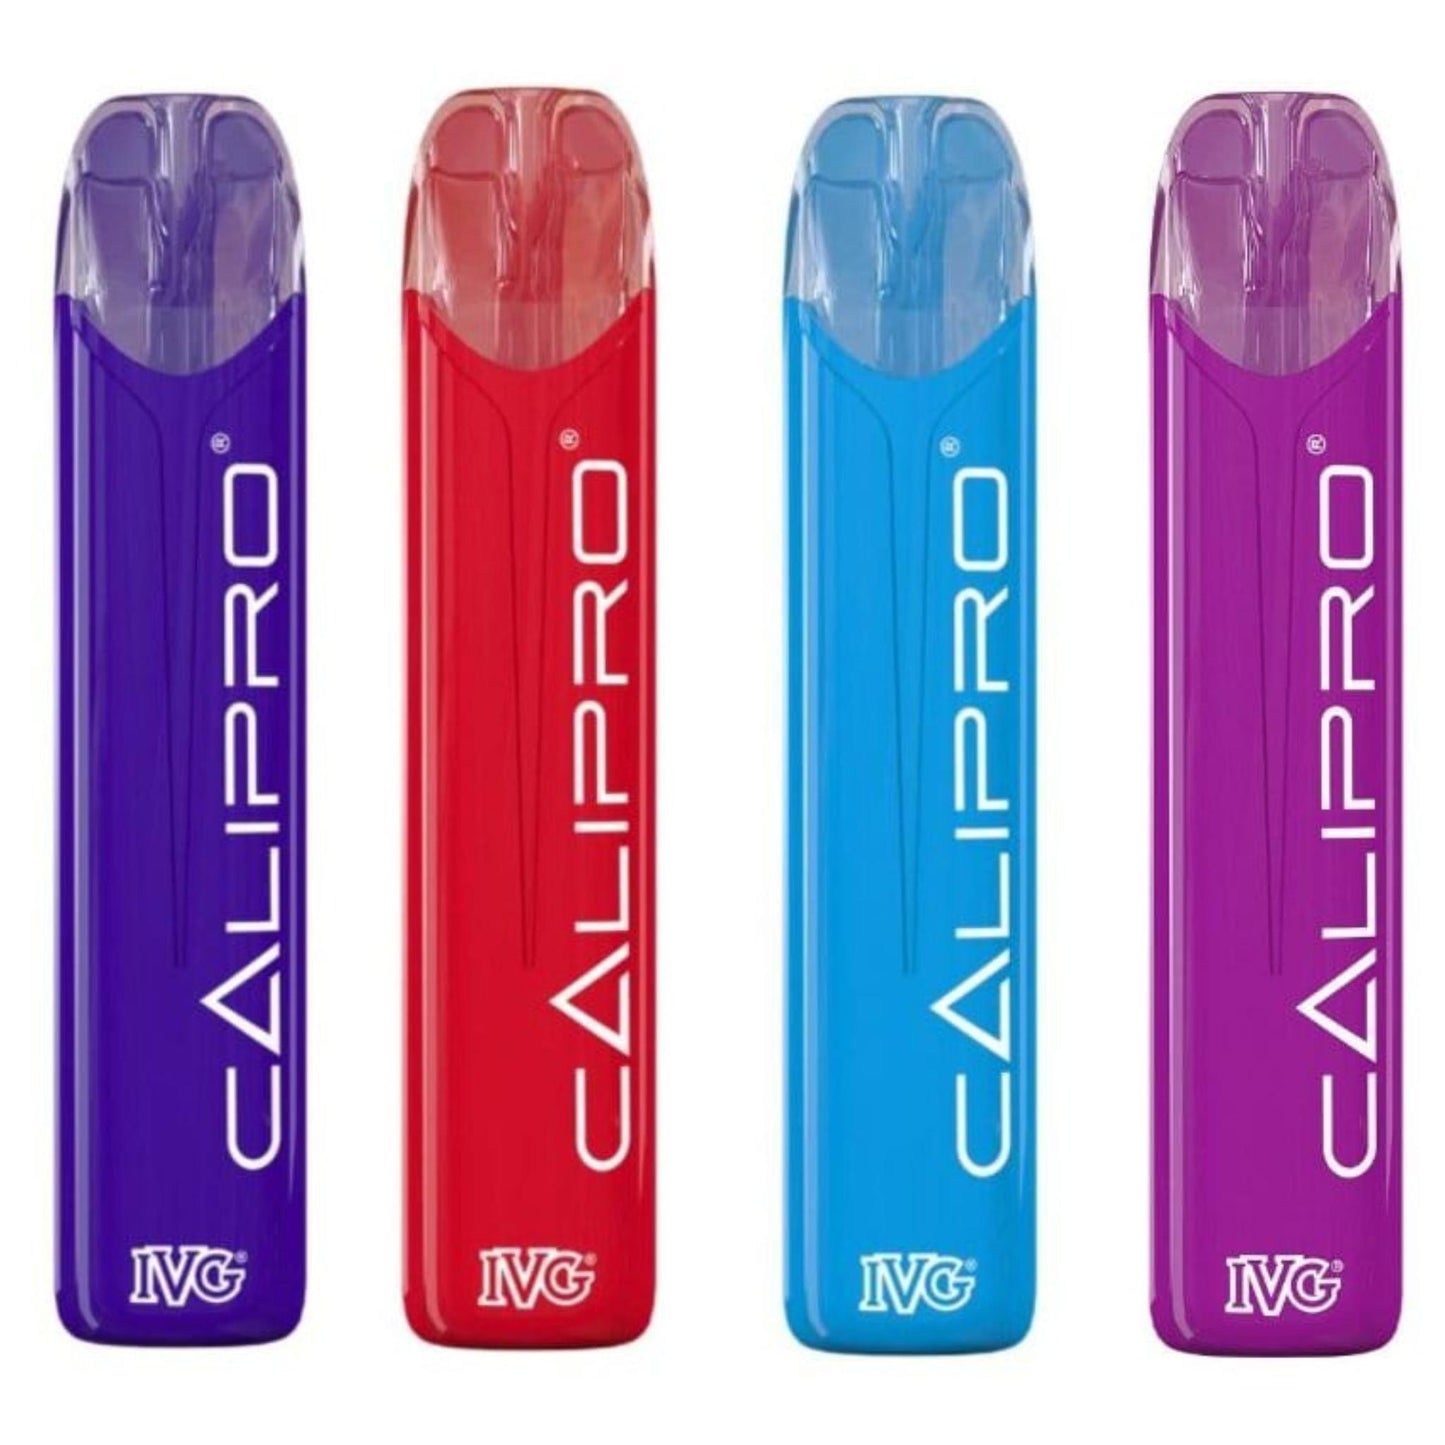 IVG Calipro 600 Puff Disposable Vape Device